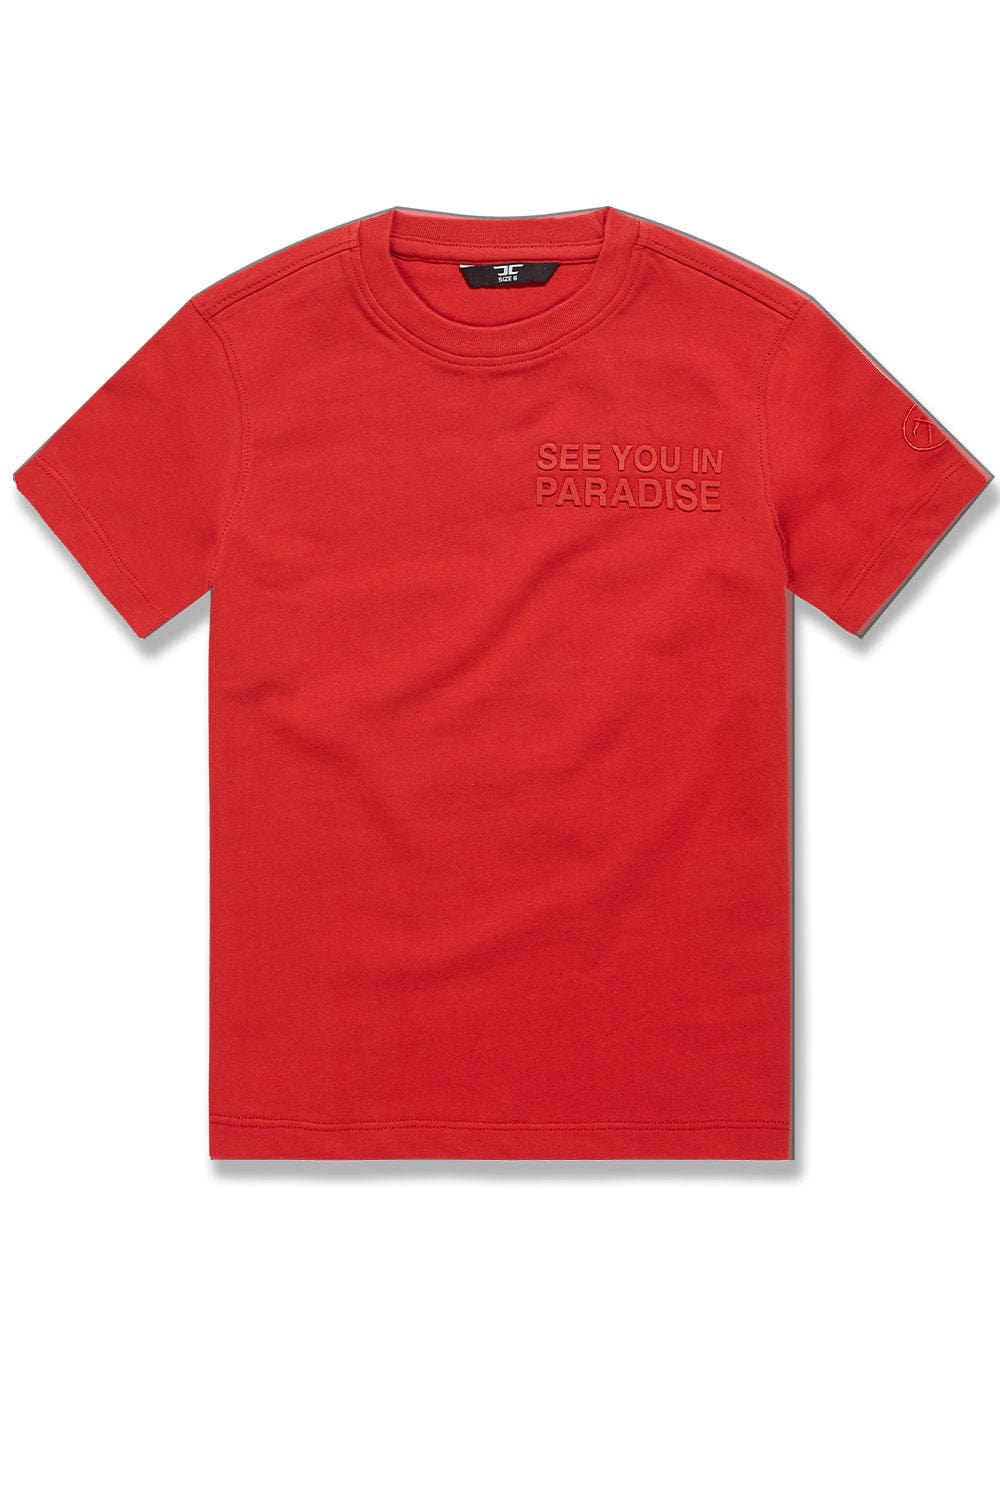 JC Kids Kids Paradise Tonal T-Shirt (Red) 2 / Red